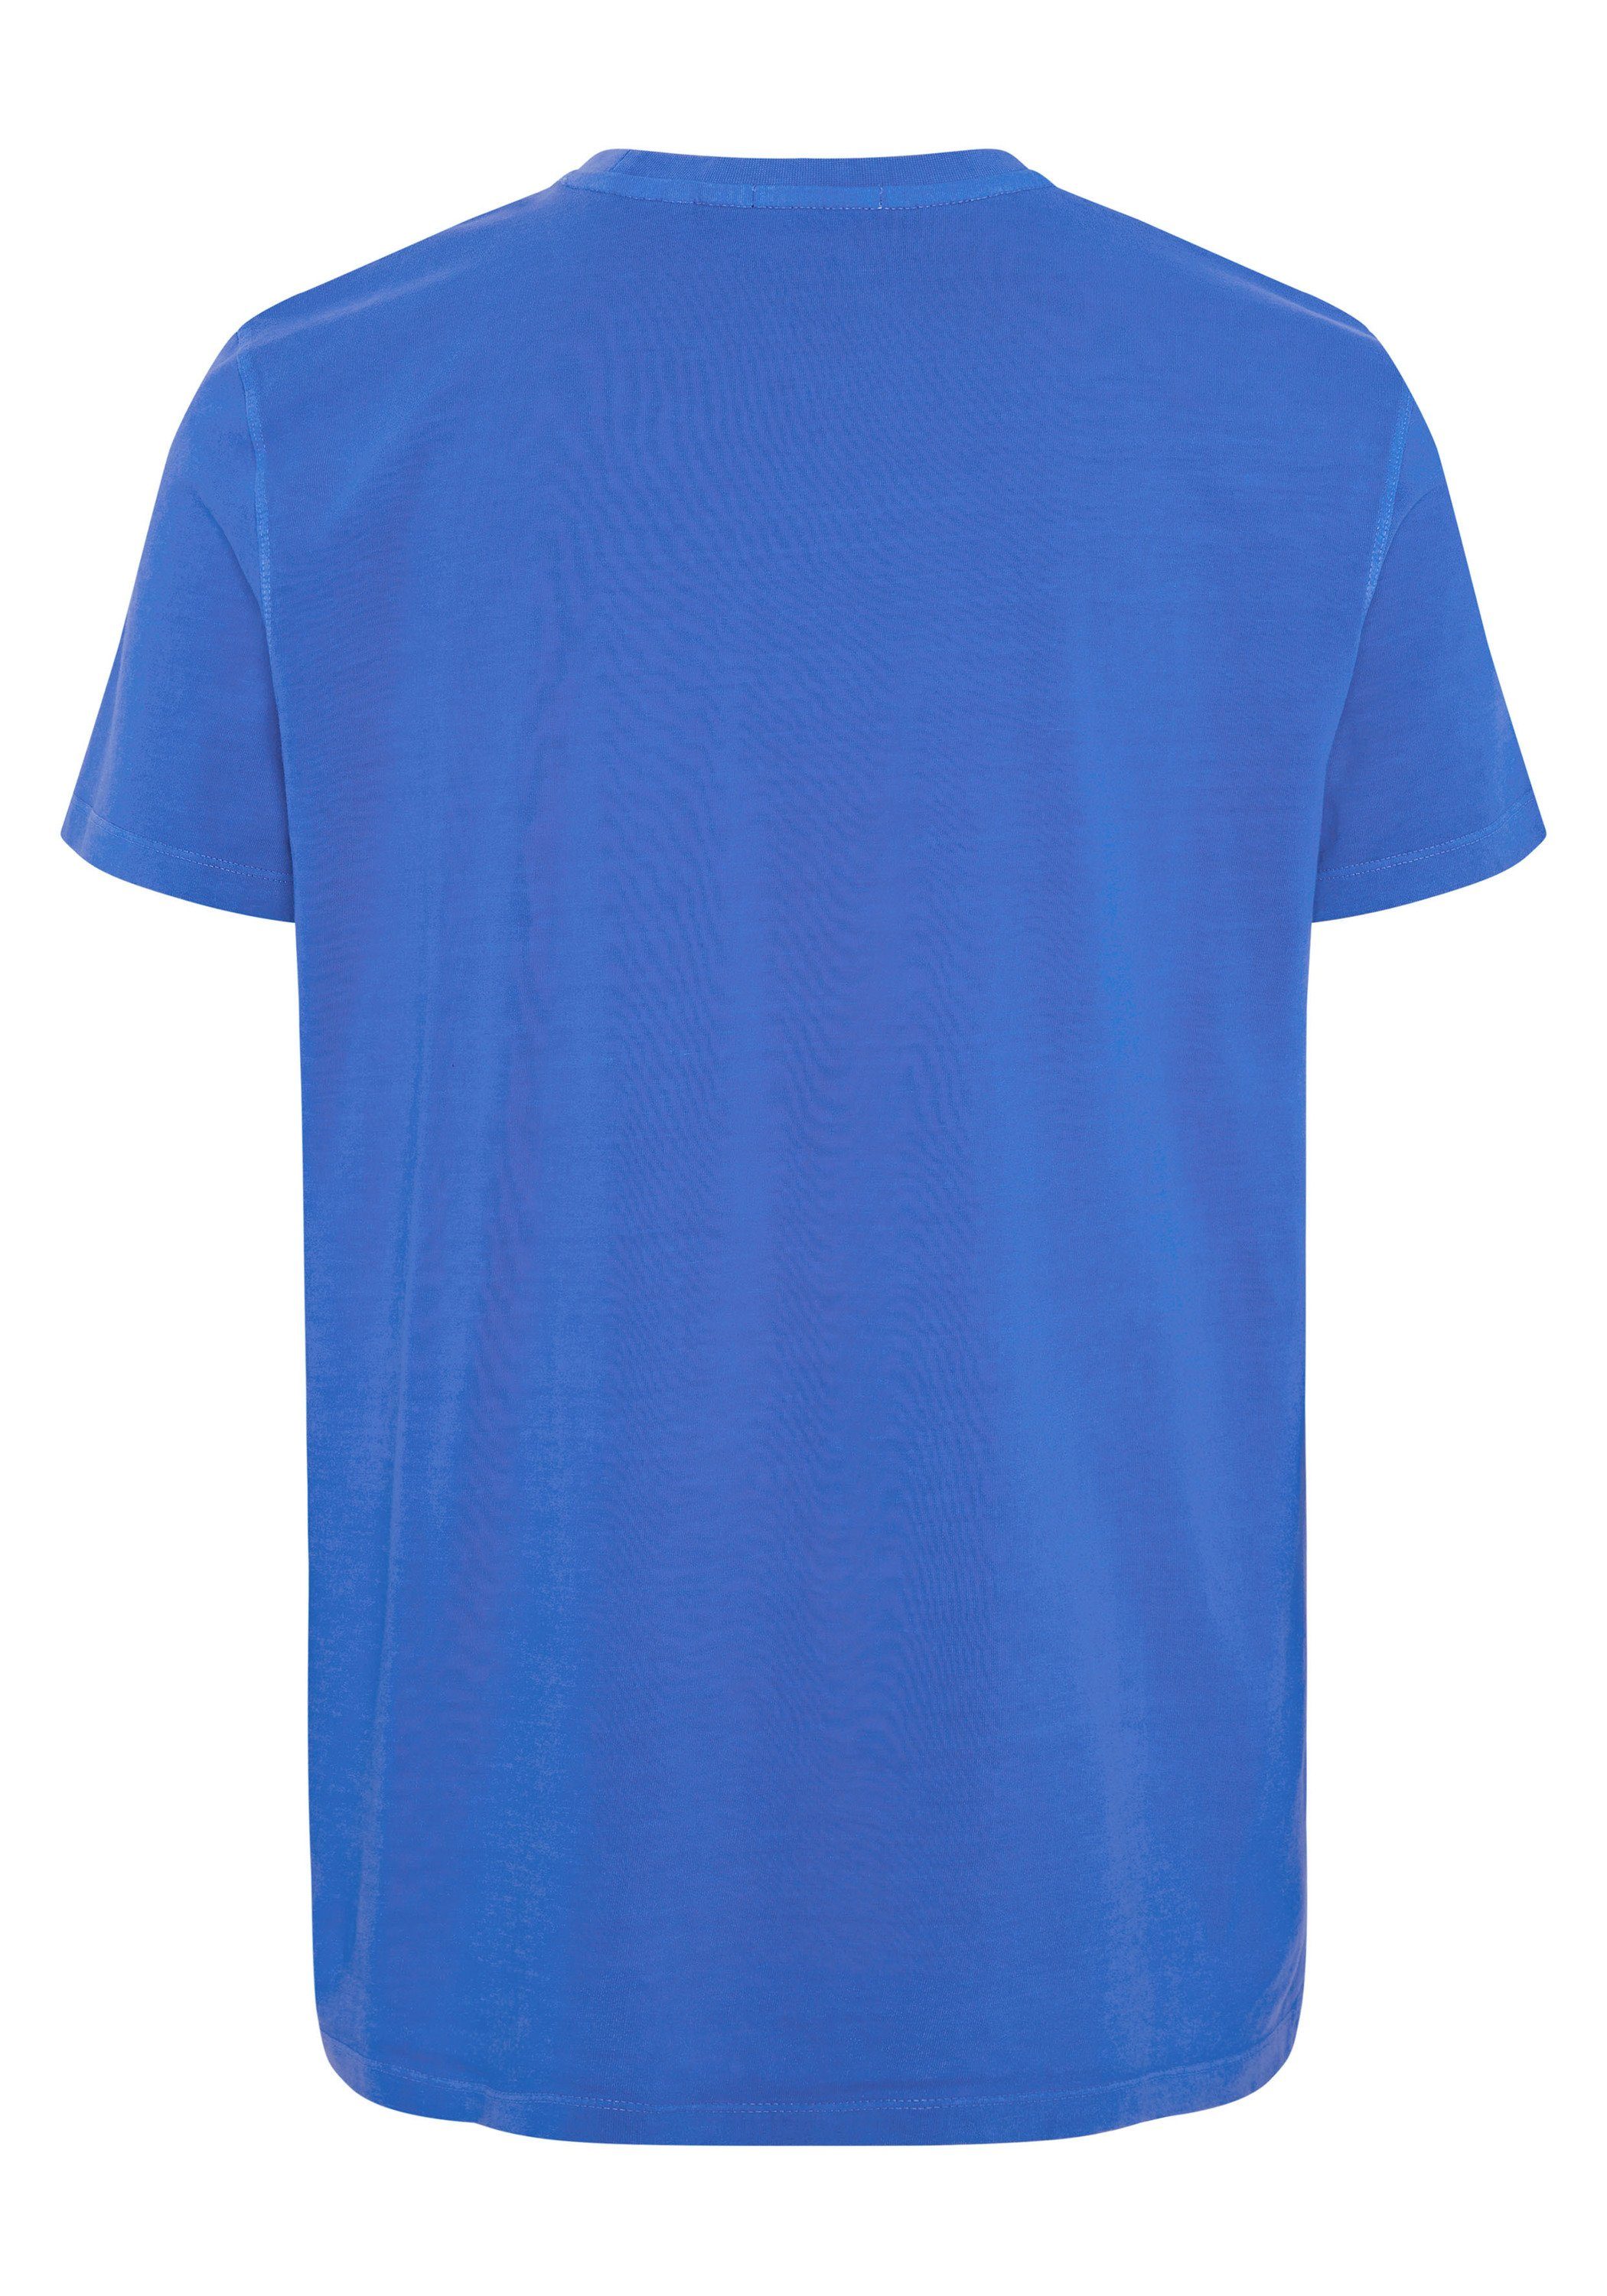 Turkish 19-4053 Sea Chiemsee Print-Shirt aus T-Shirt Baumwolljersey 1